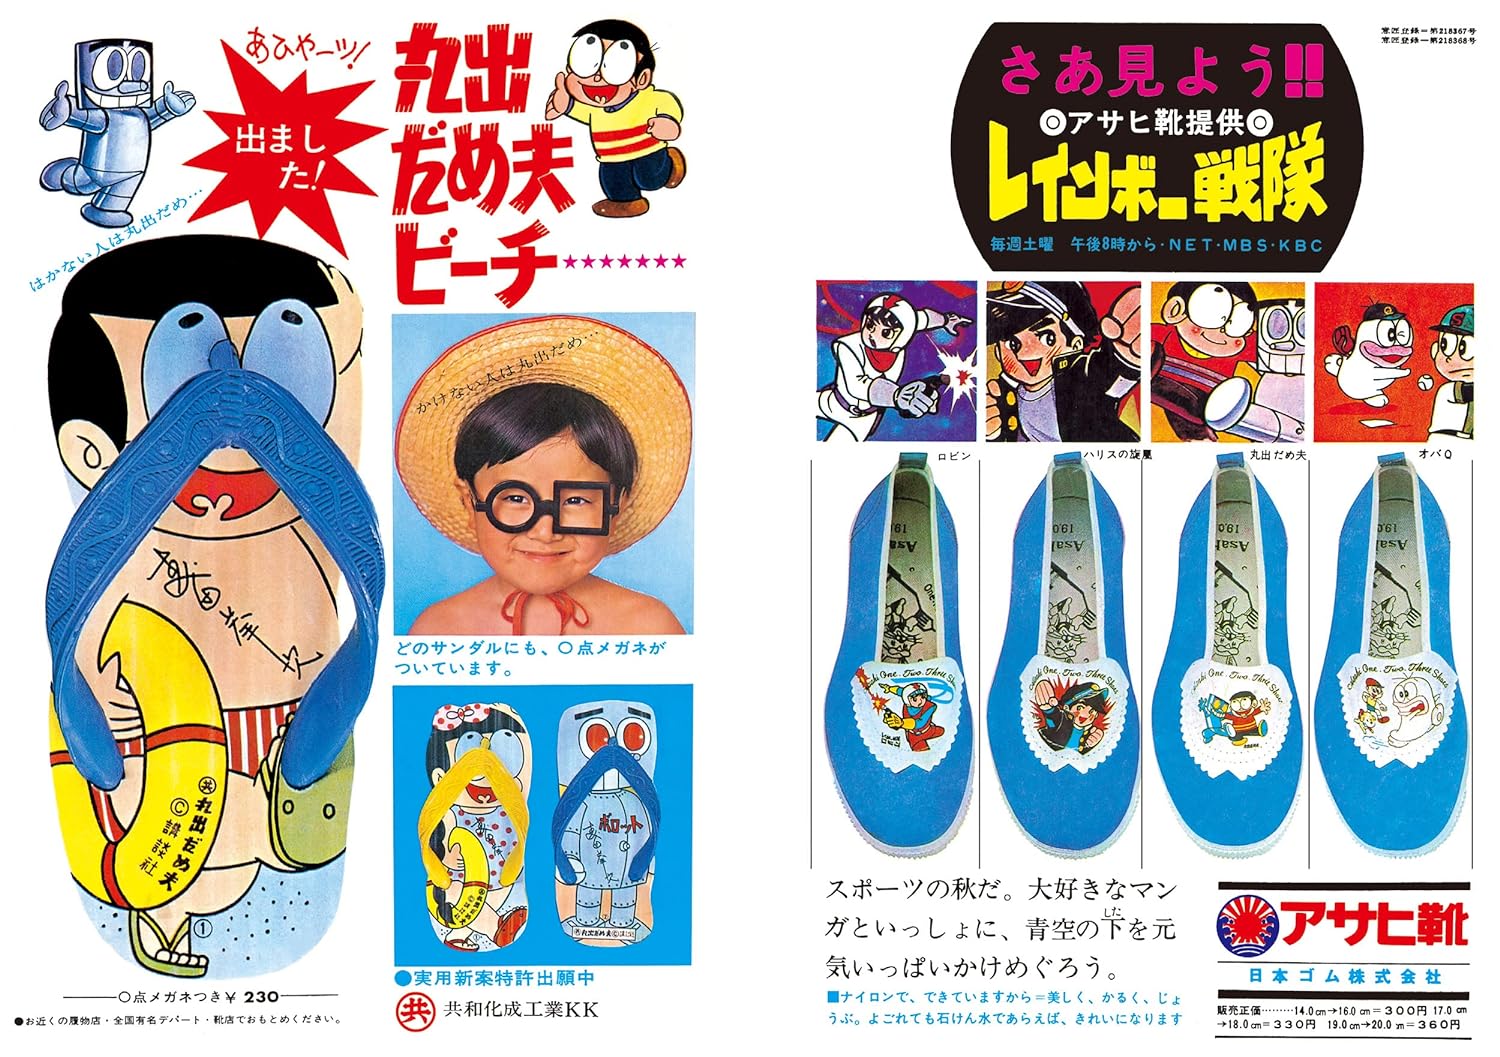 Children's advertisement in the Showa era